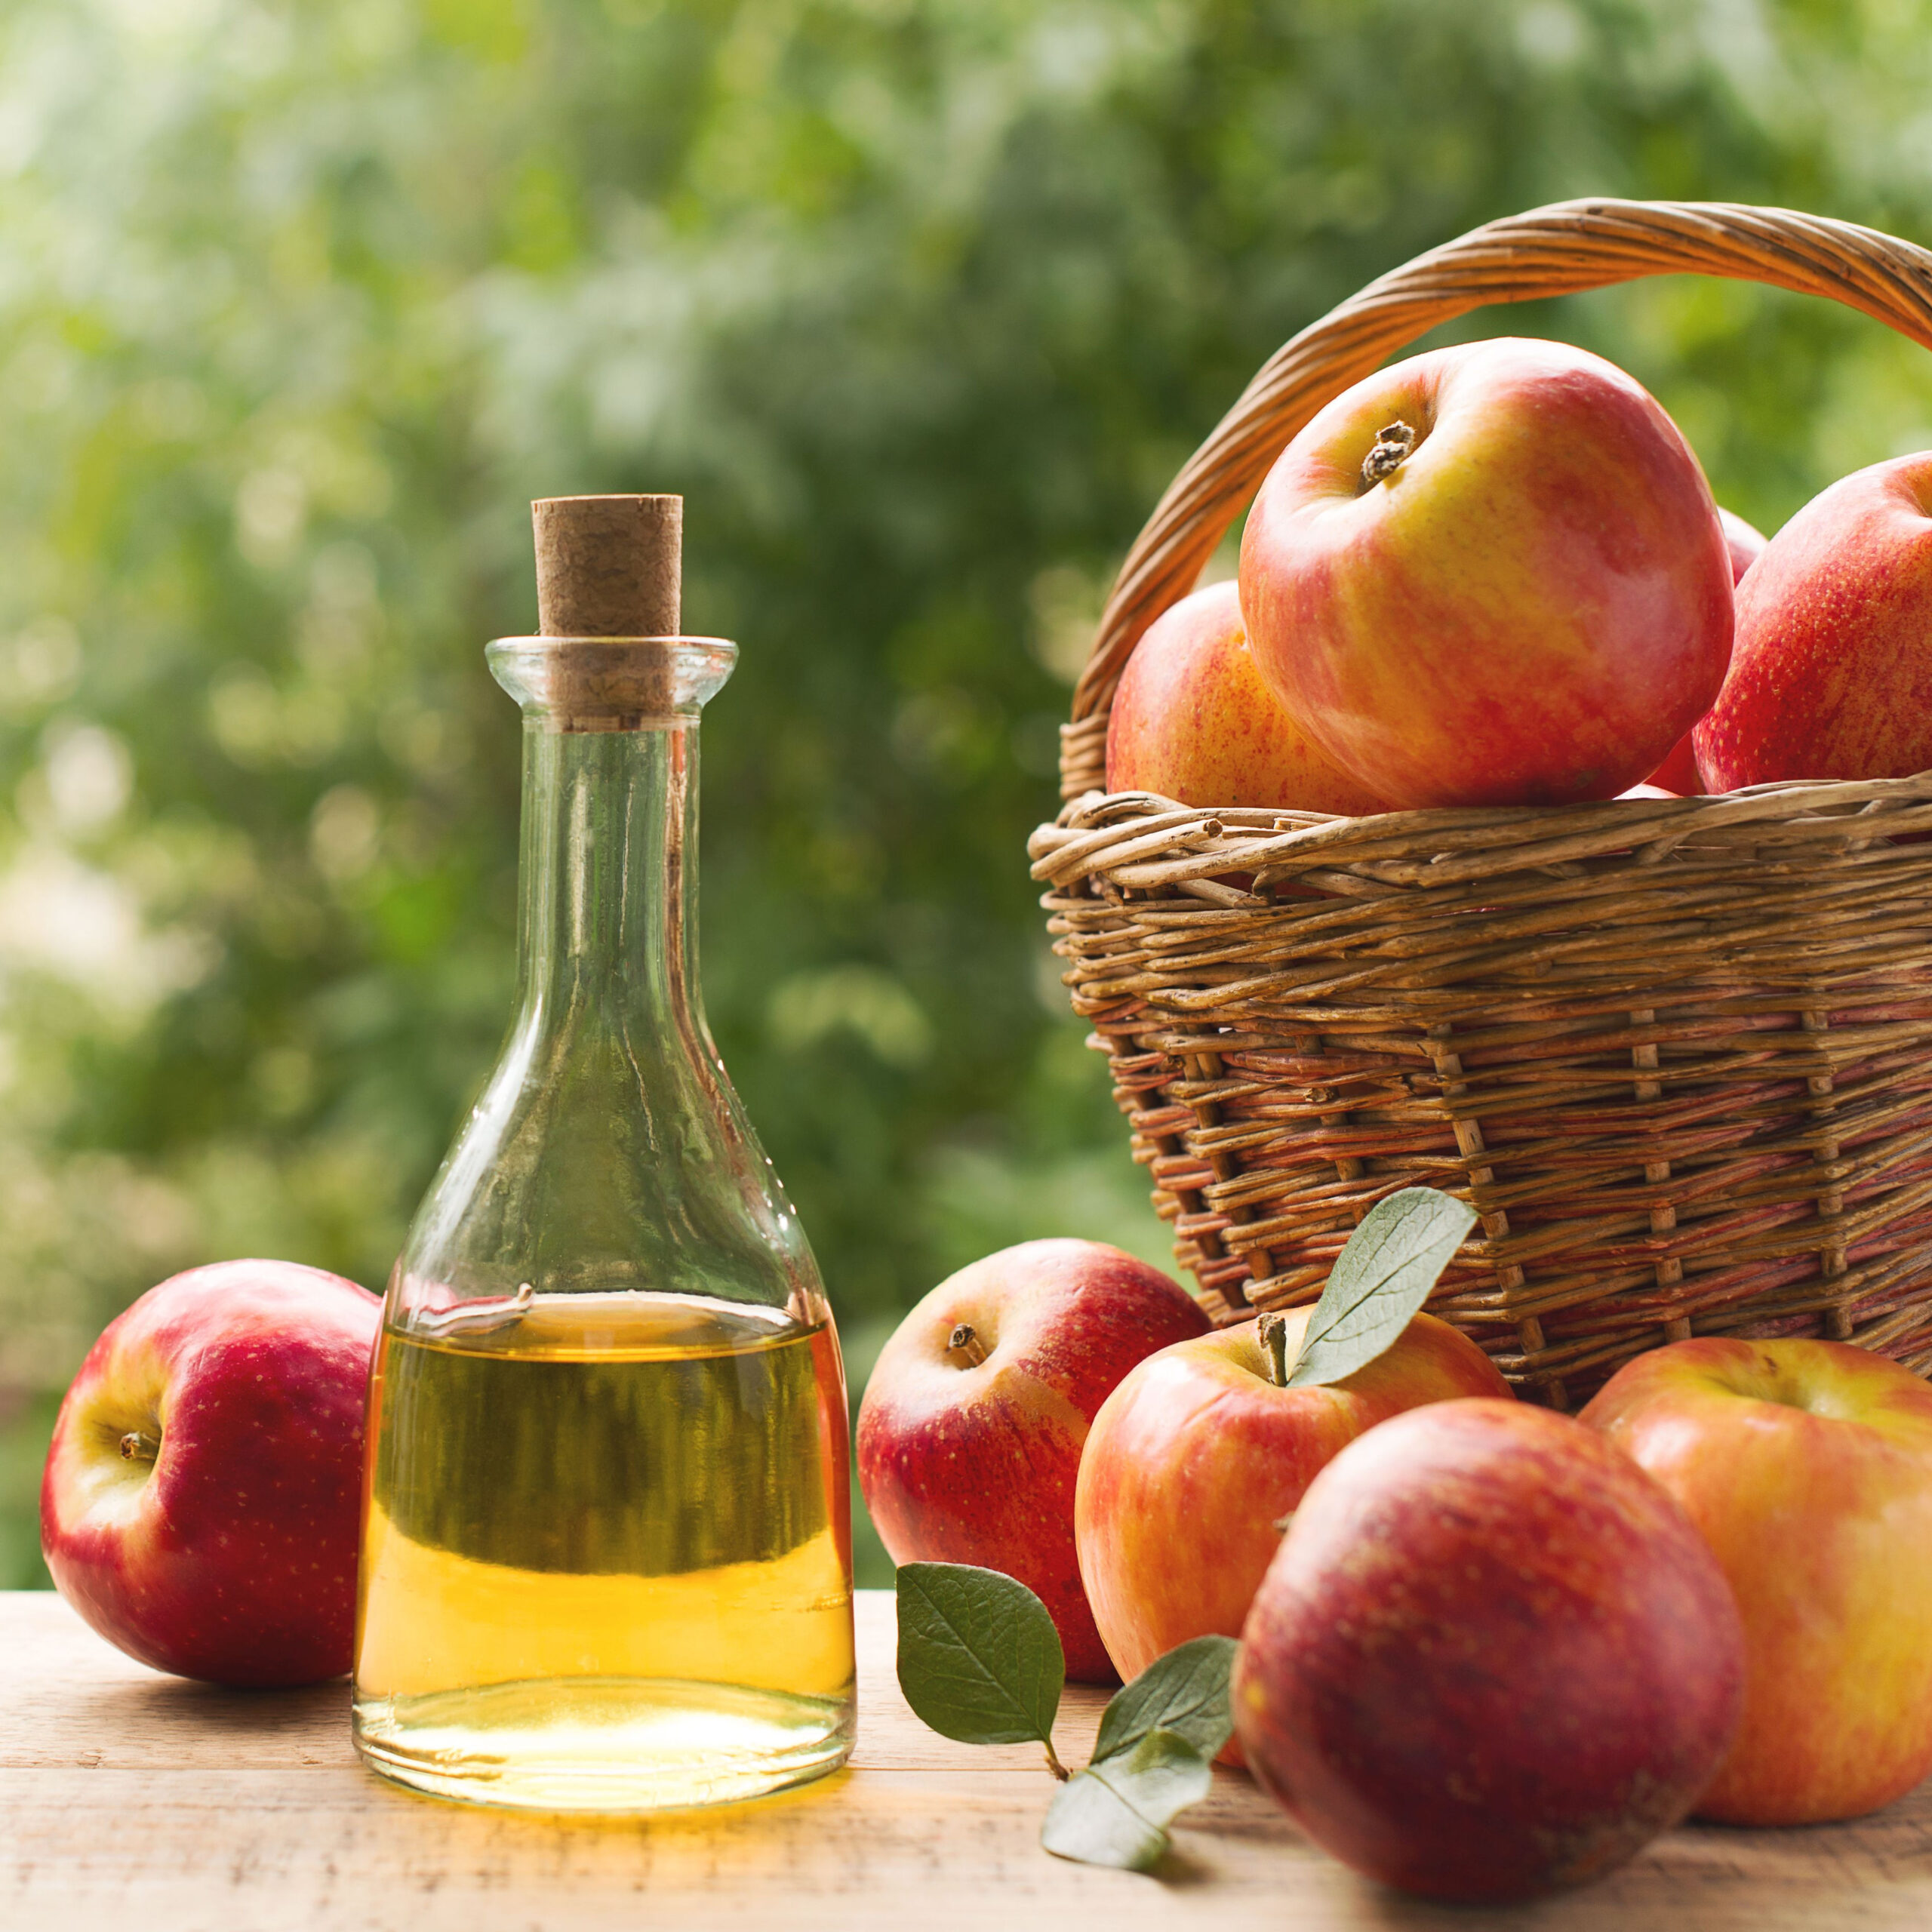 apple cider vinegar bottle beside basket of apples outdoors